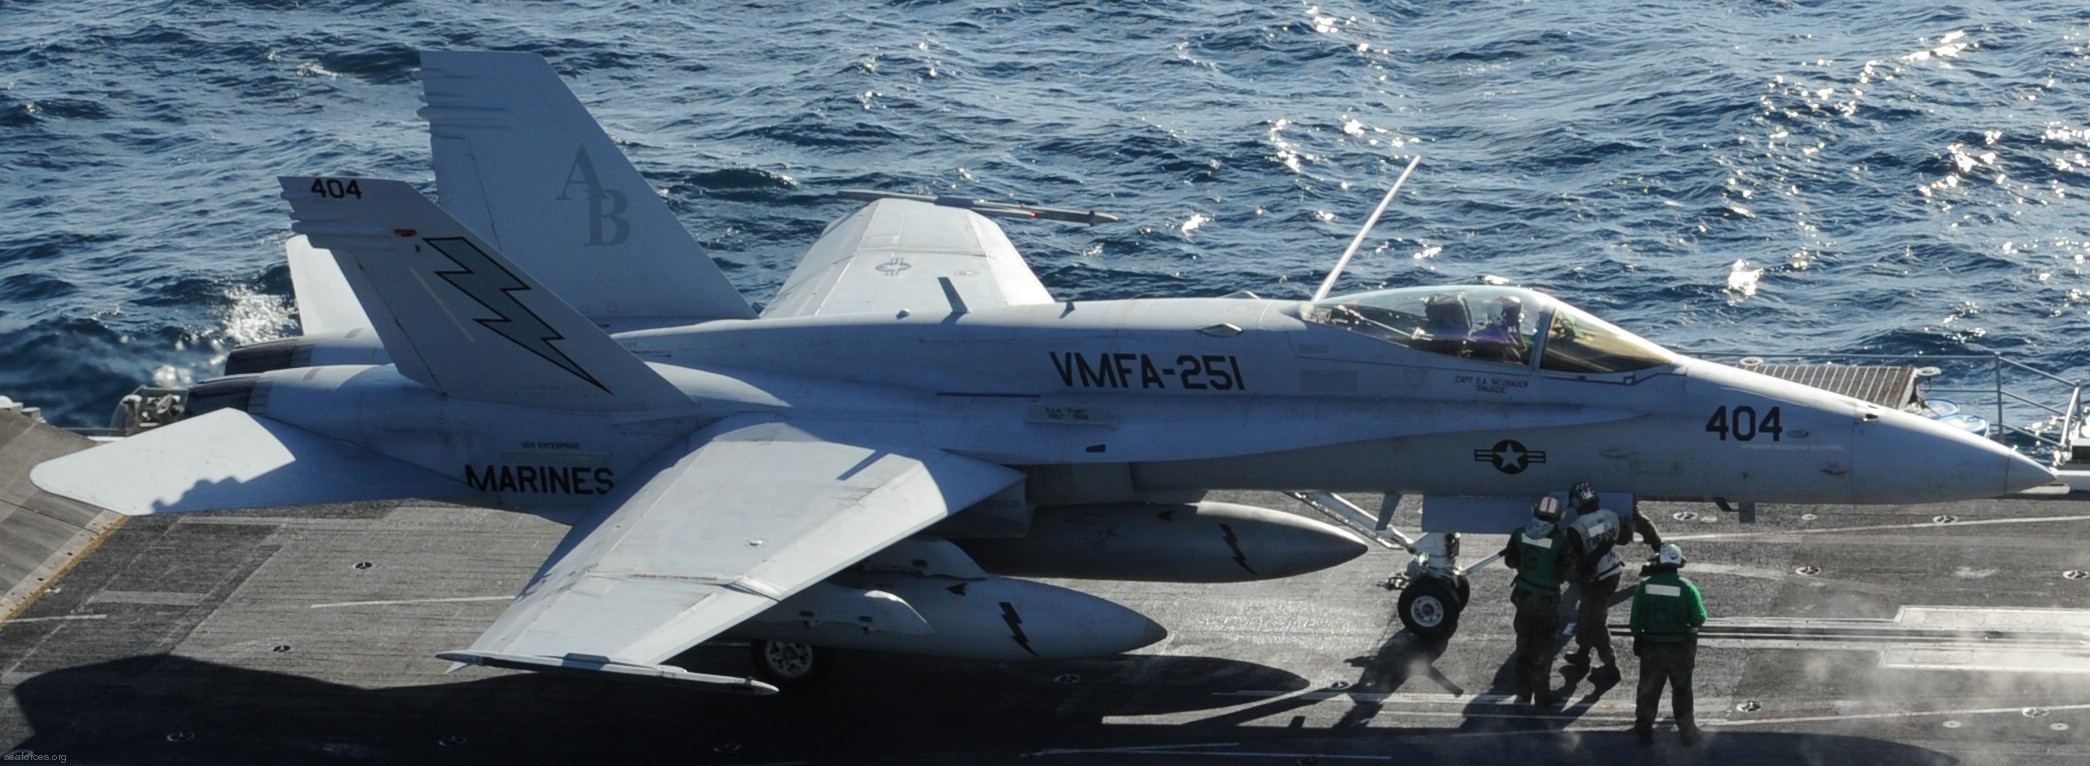 vmfa-251 thunderbolts marine fighter attack squadron f/a-18c hornet cvw-1 uss enterprise cvn-65 35